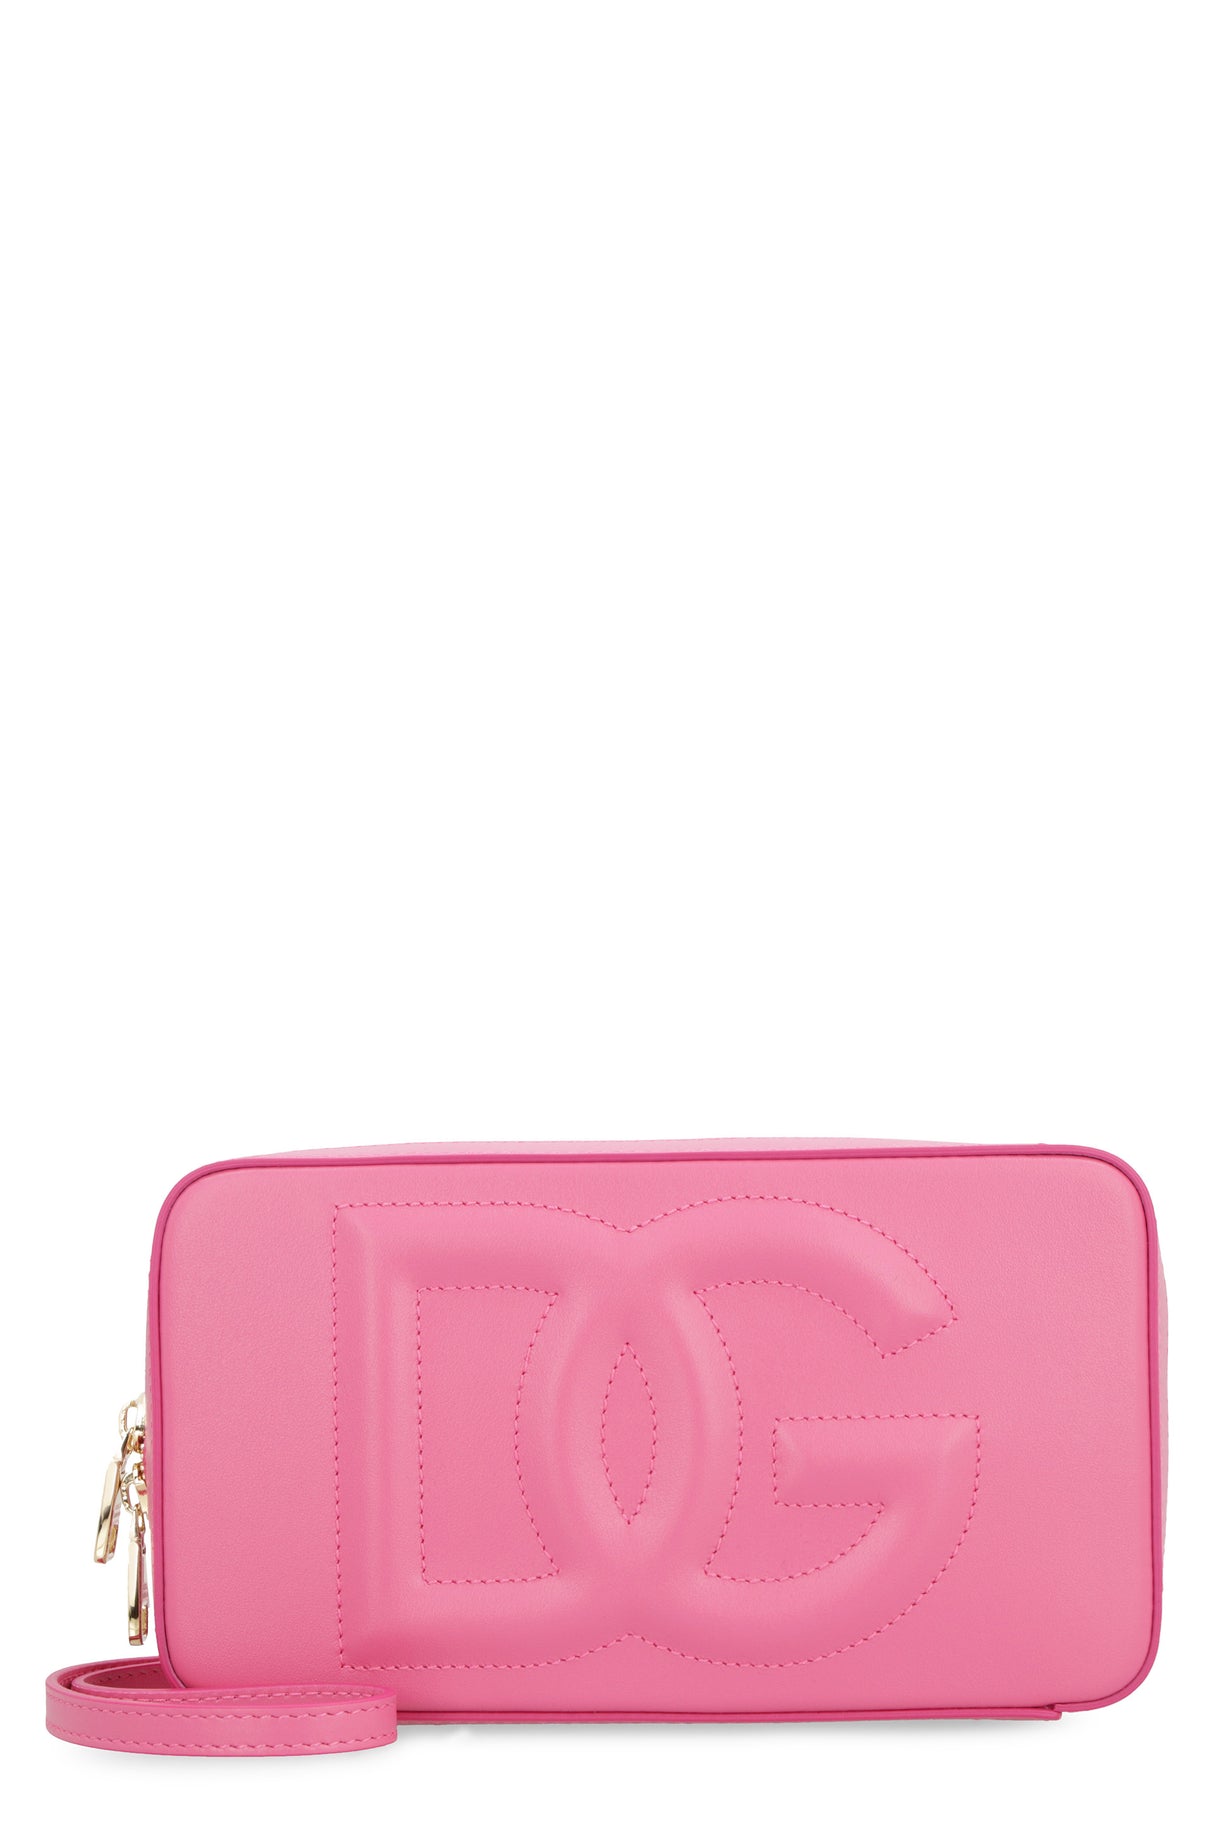 DOLCE & GABBANA Pink Leather Camera Handbag with DG Logo